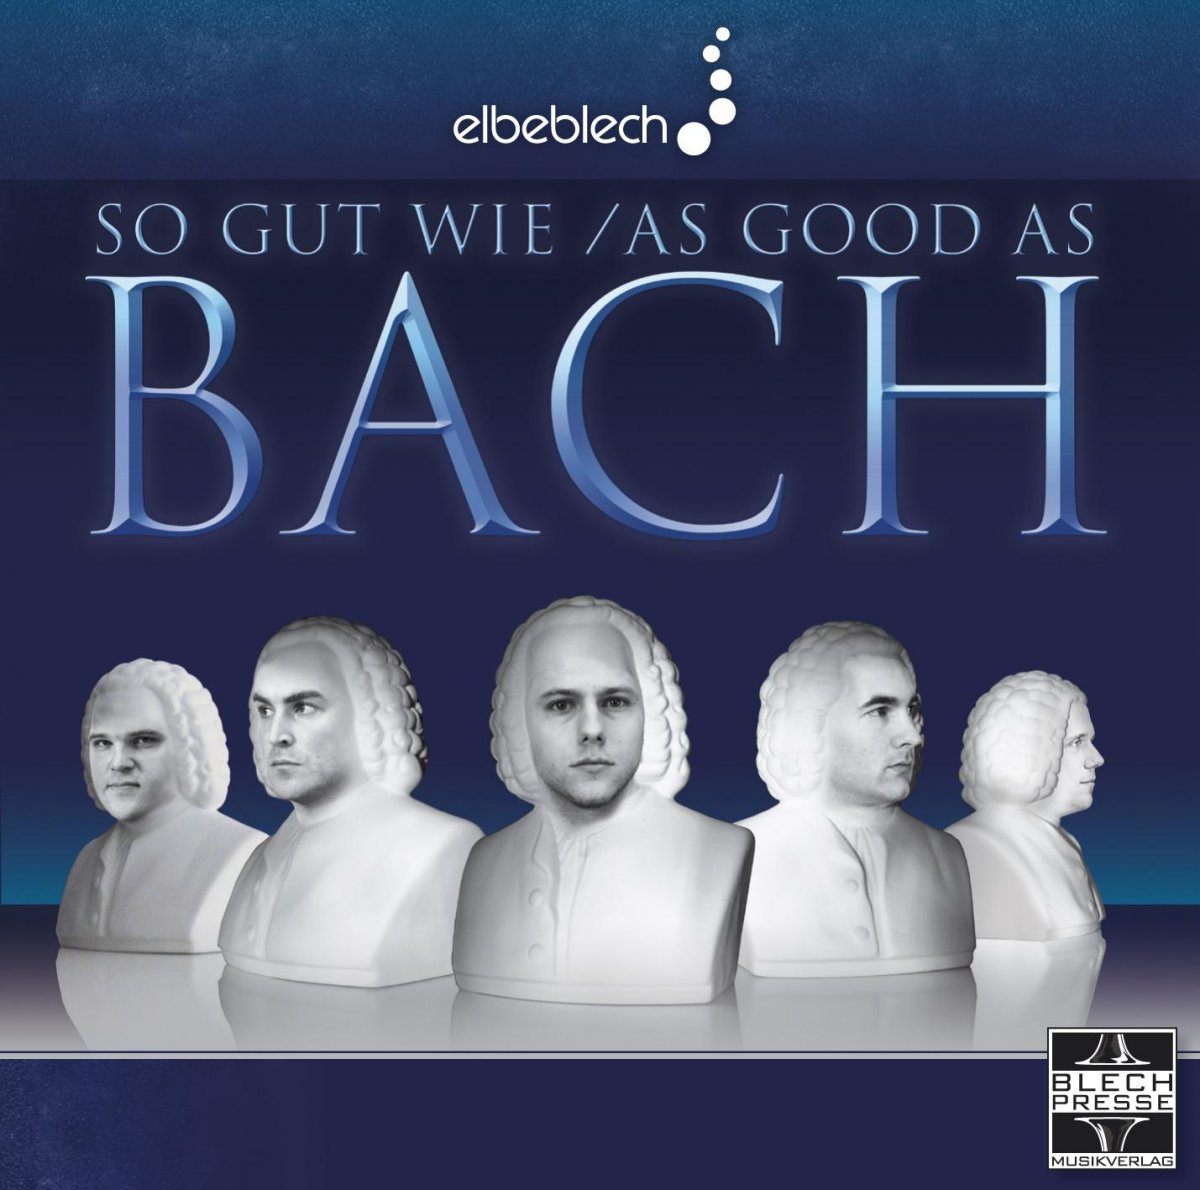 So gut wie Bach / As good as Bach - hier klicken